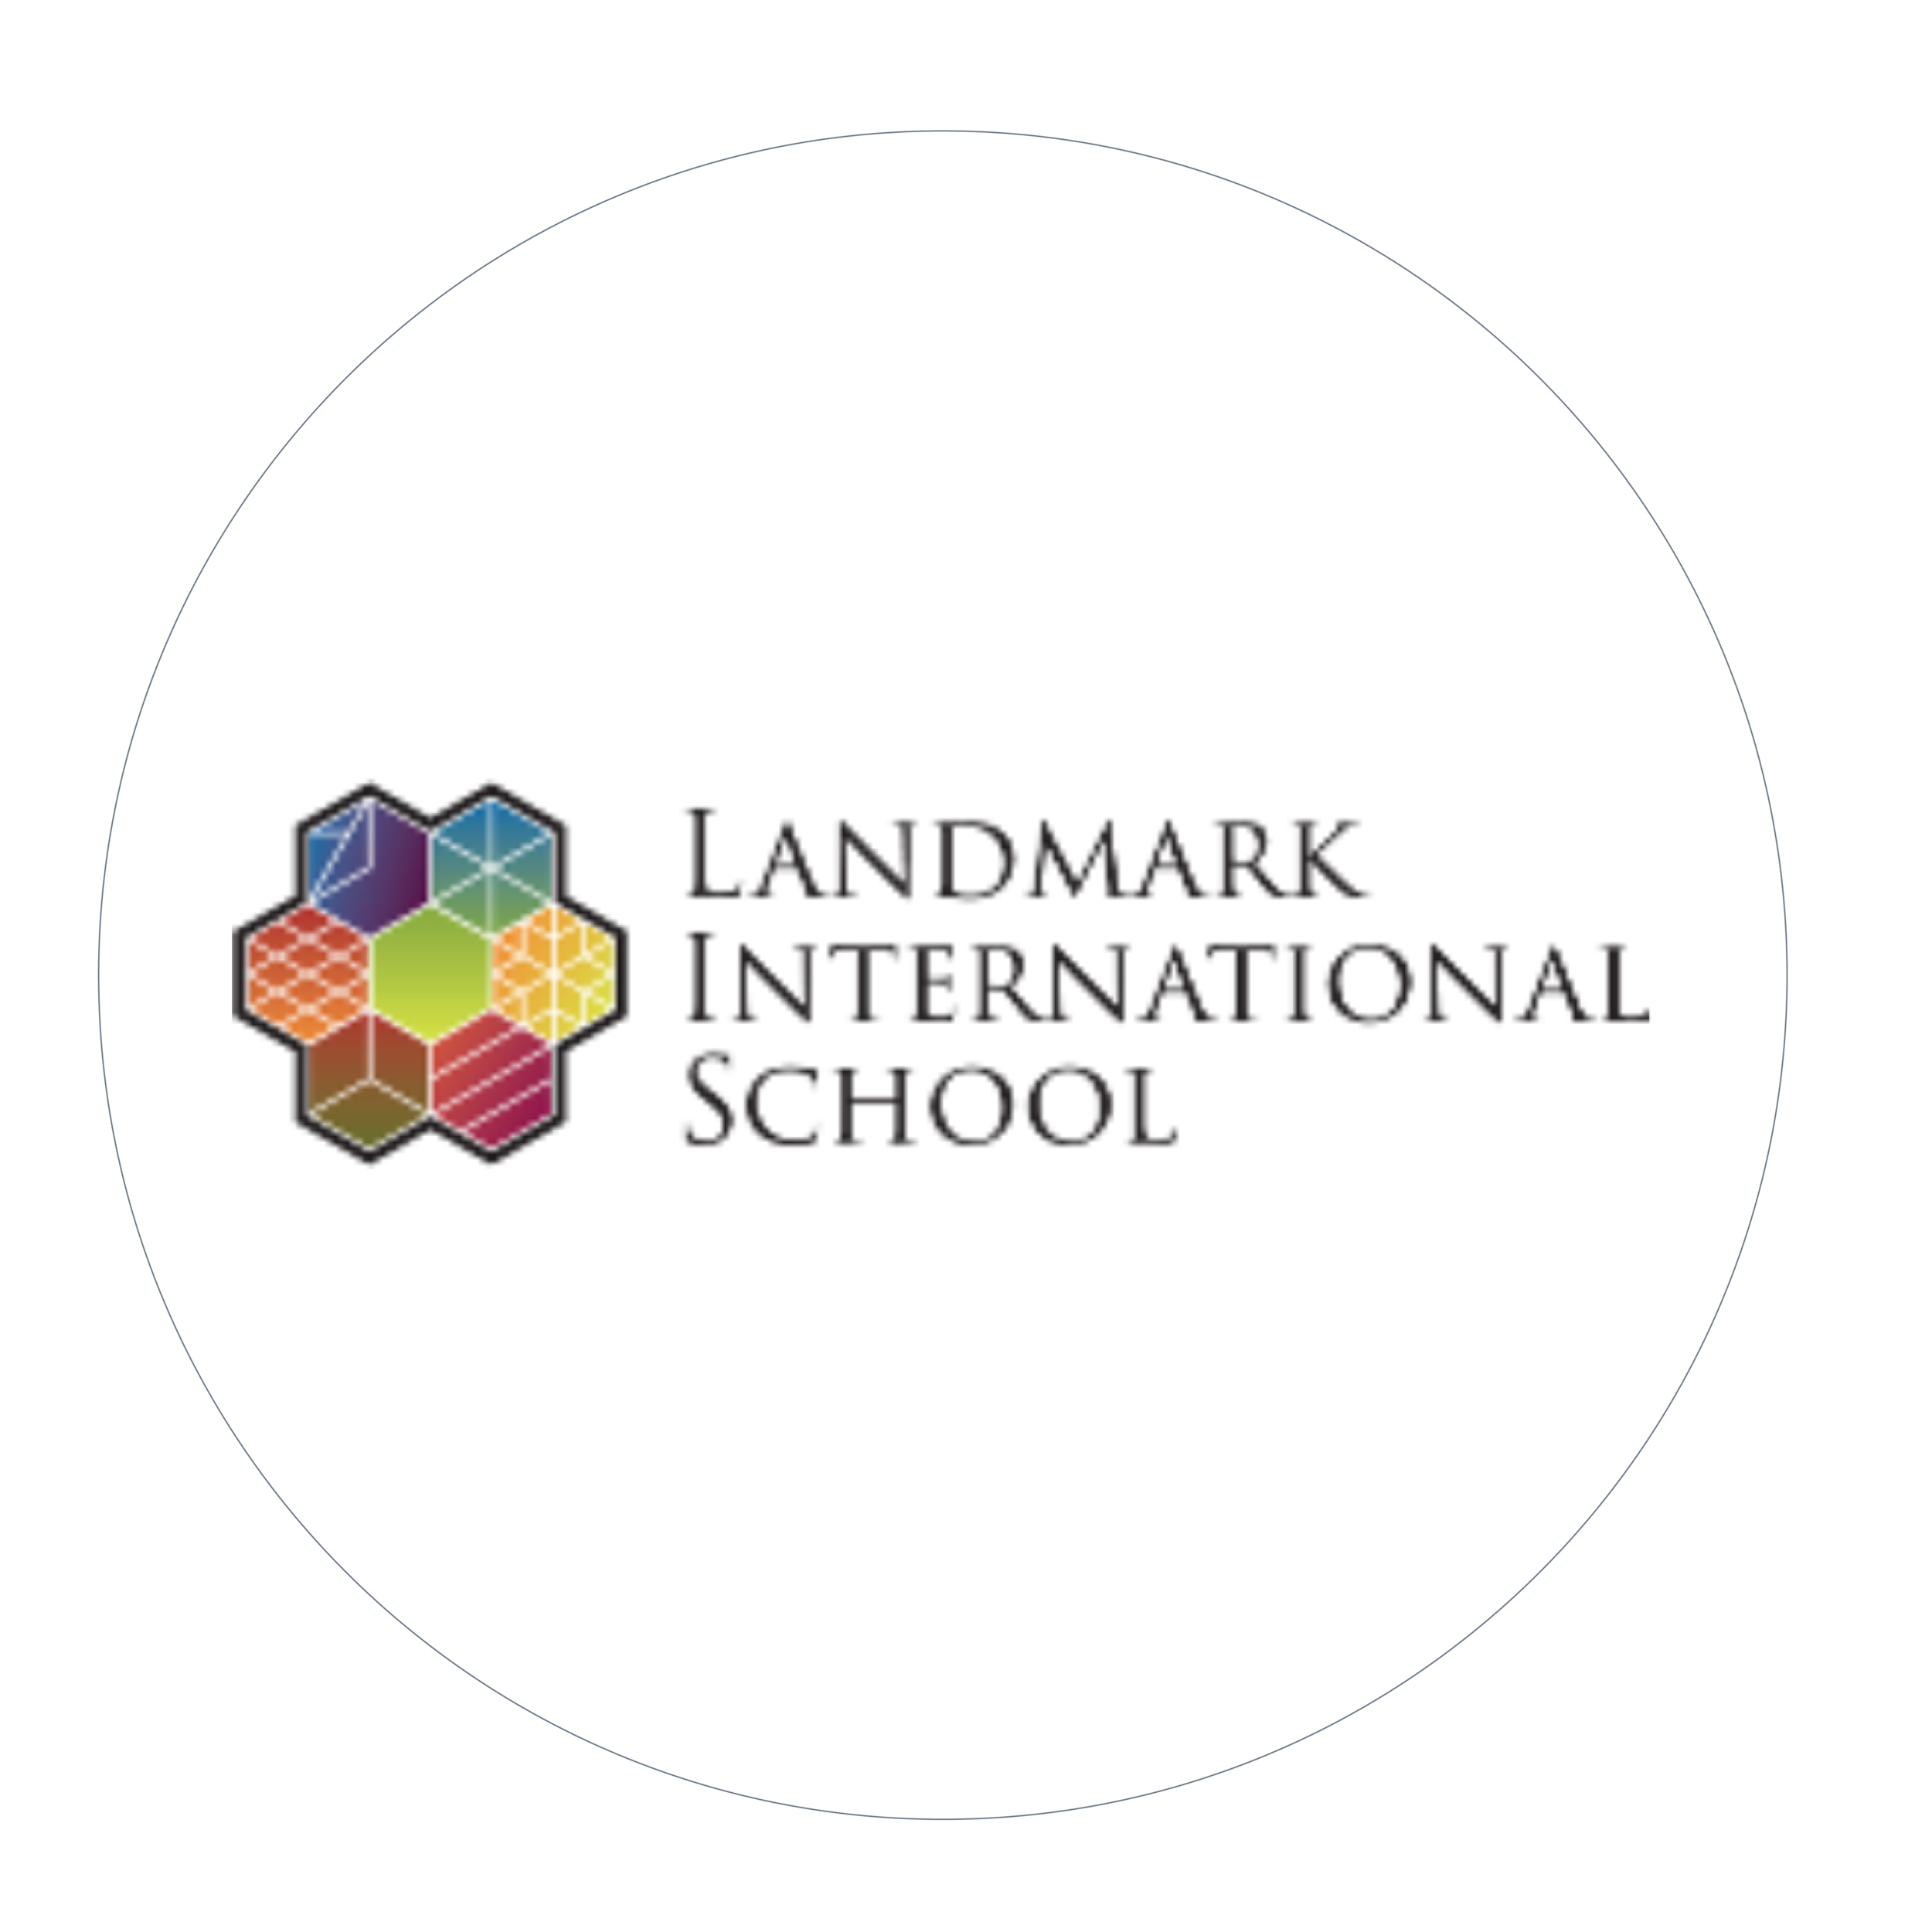 Landmark International School